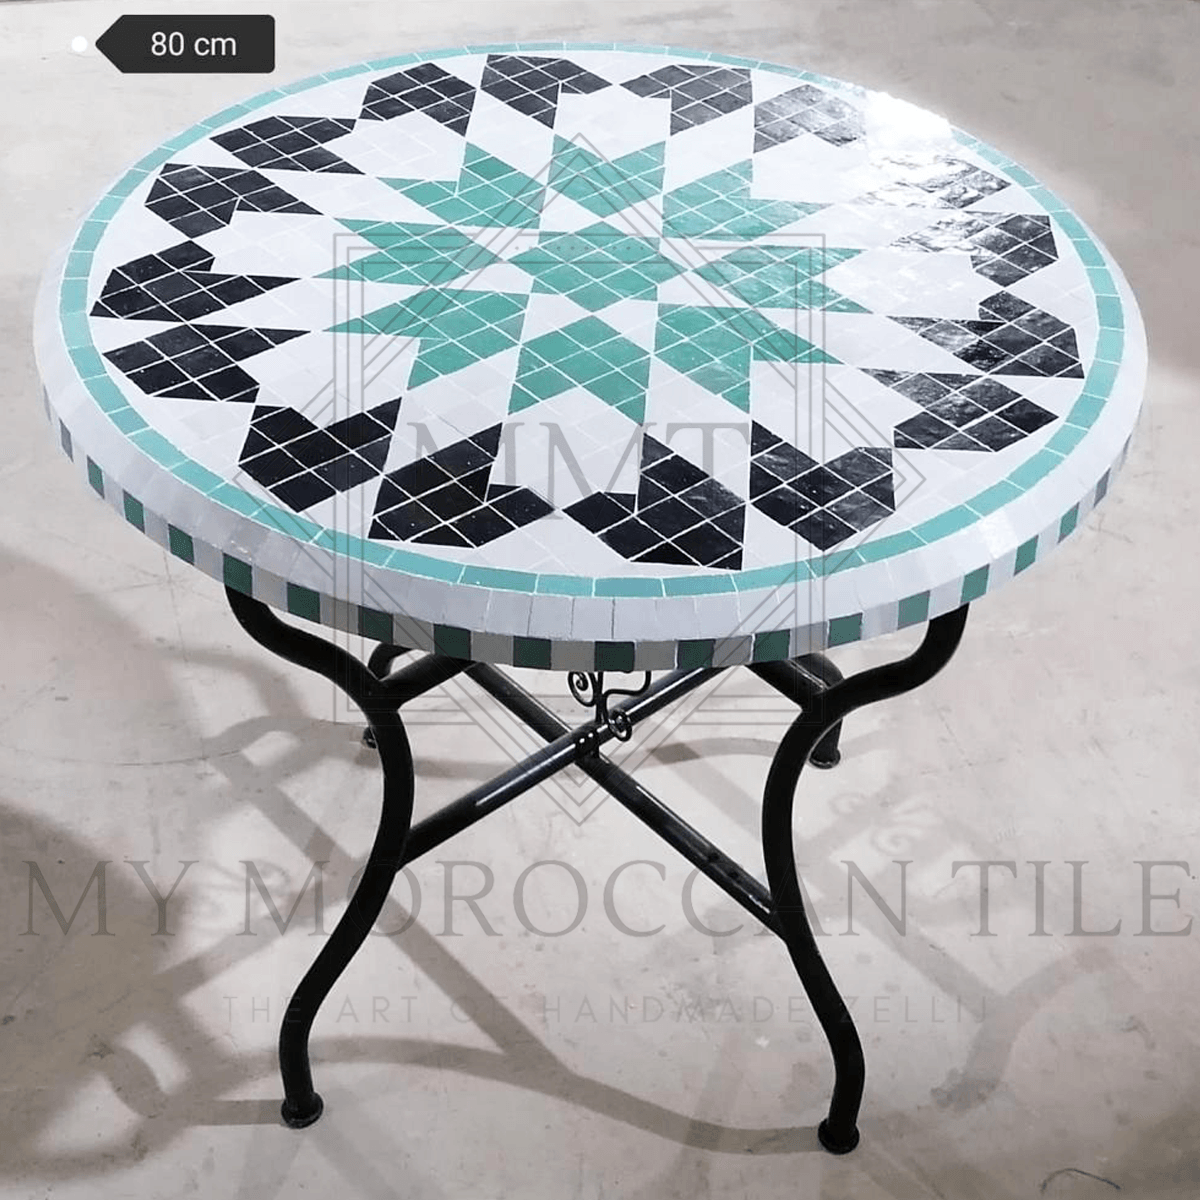 Handmade Moroccan Mosaic Table 2111-03